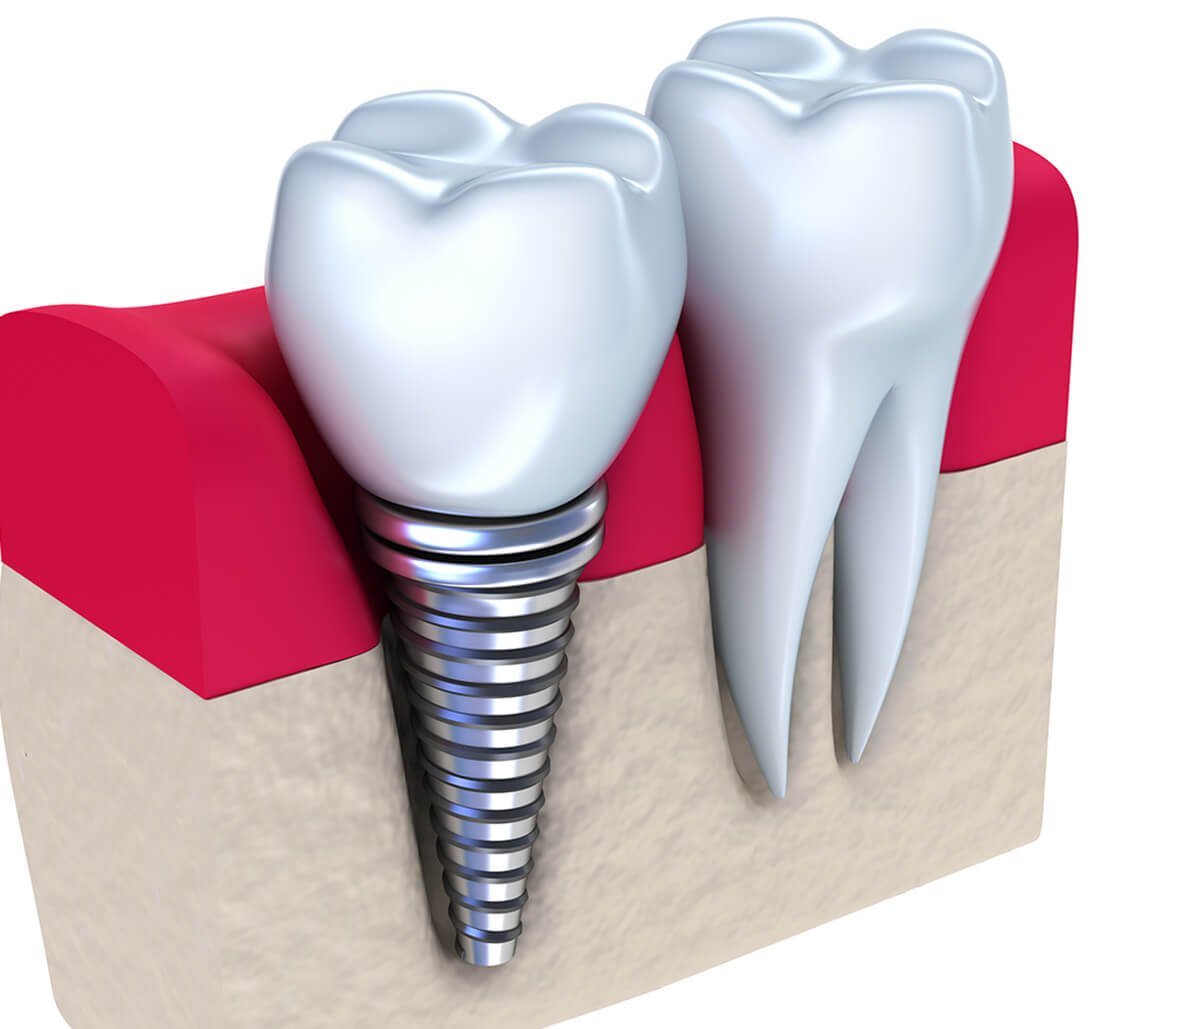 Teeth Implants Dentist in Burr Ridge IL Area